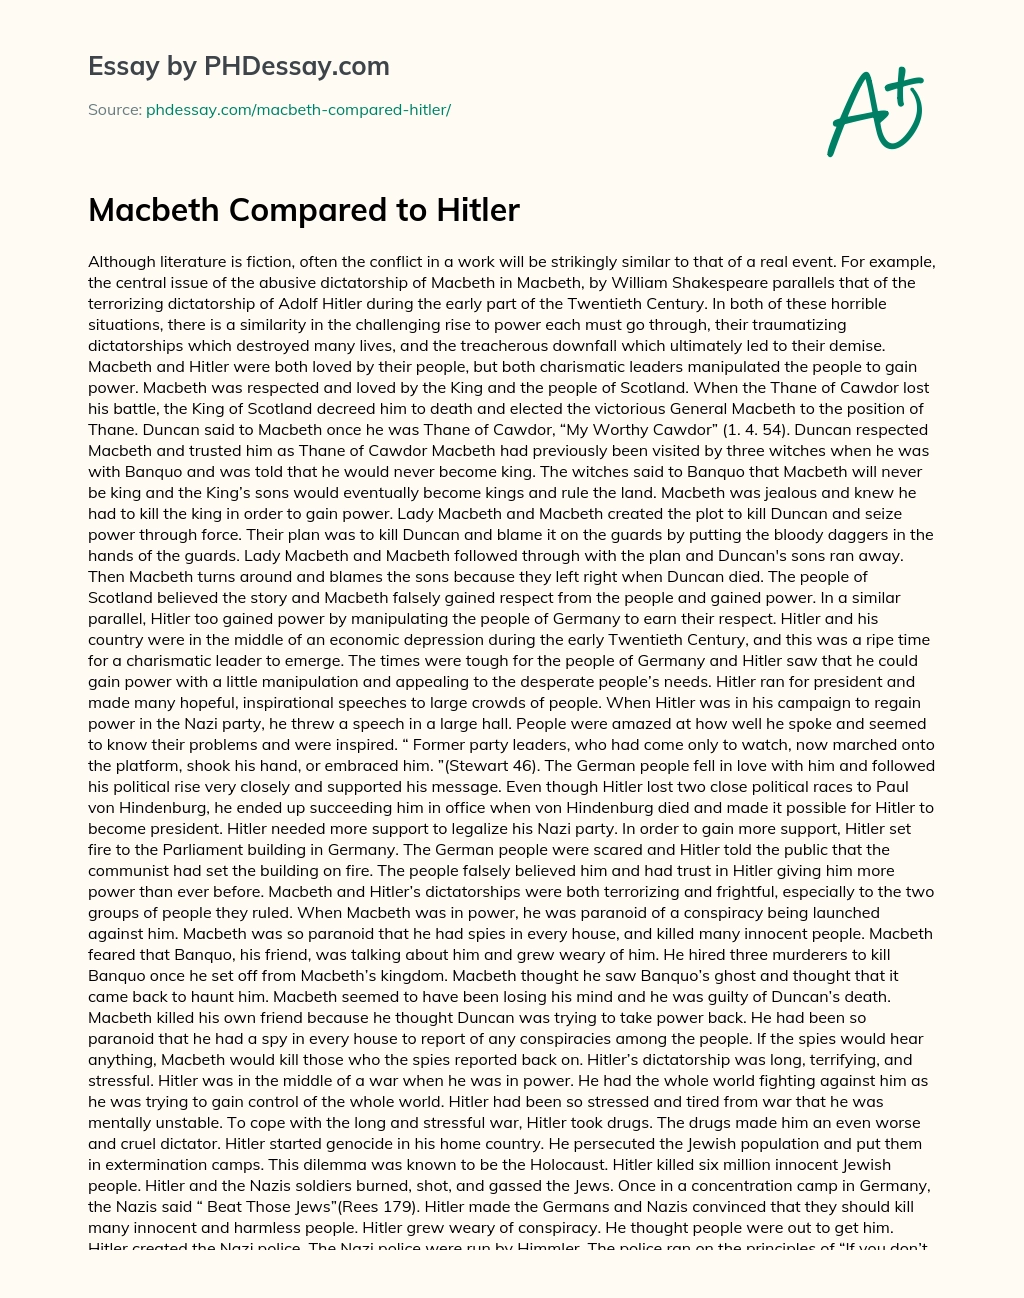 Macbeth Compared to Hitler essay